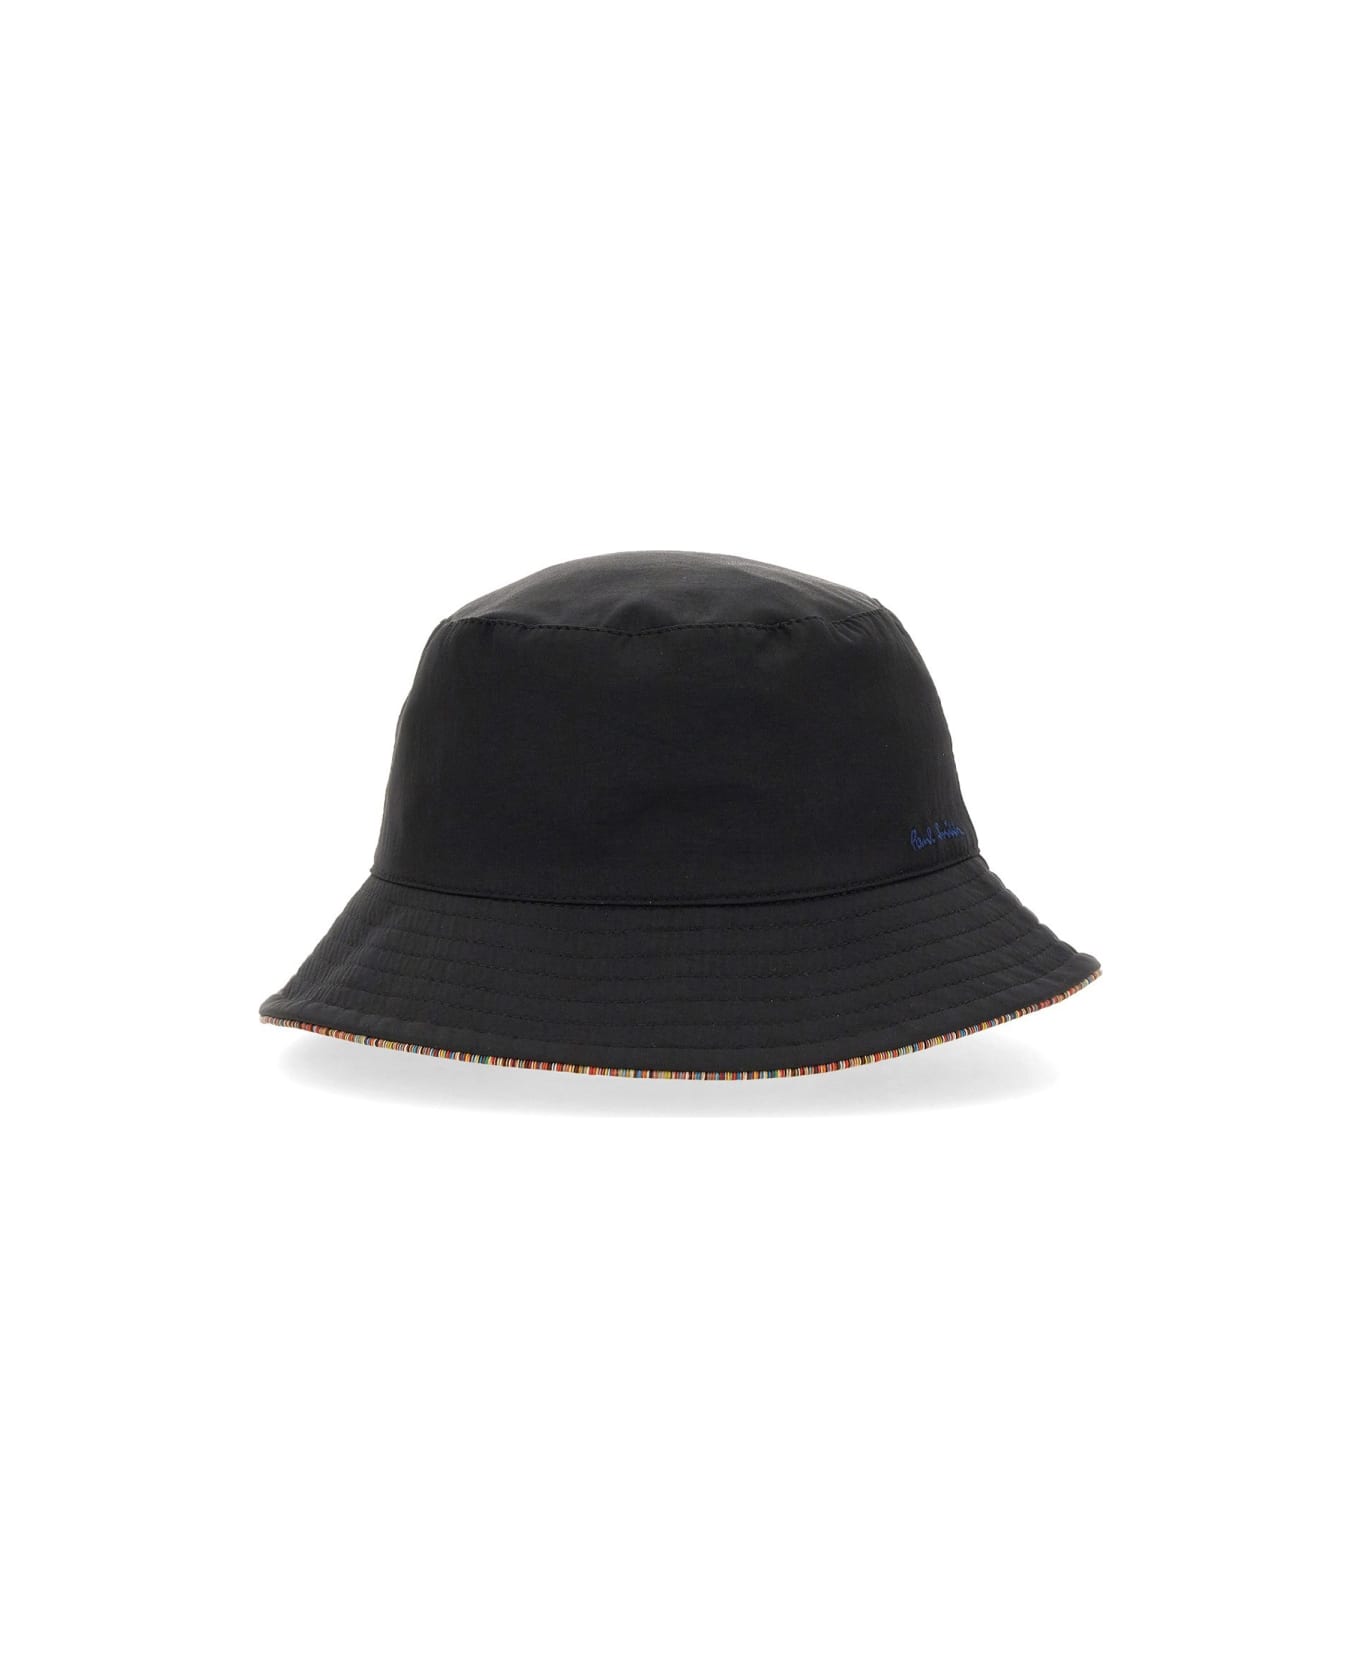 Paul Smith Reversible Bucket Hat - BLUE